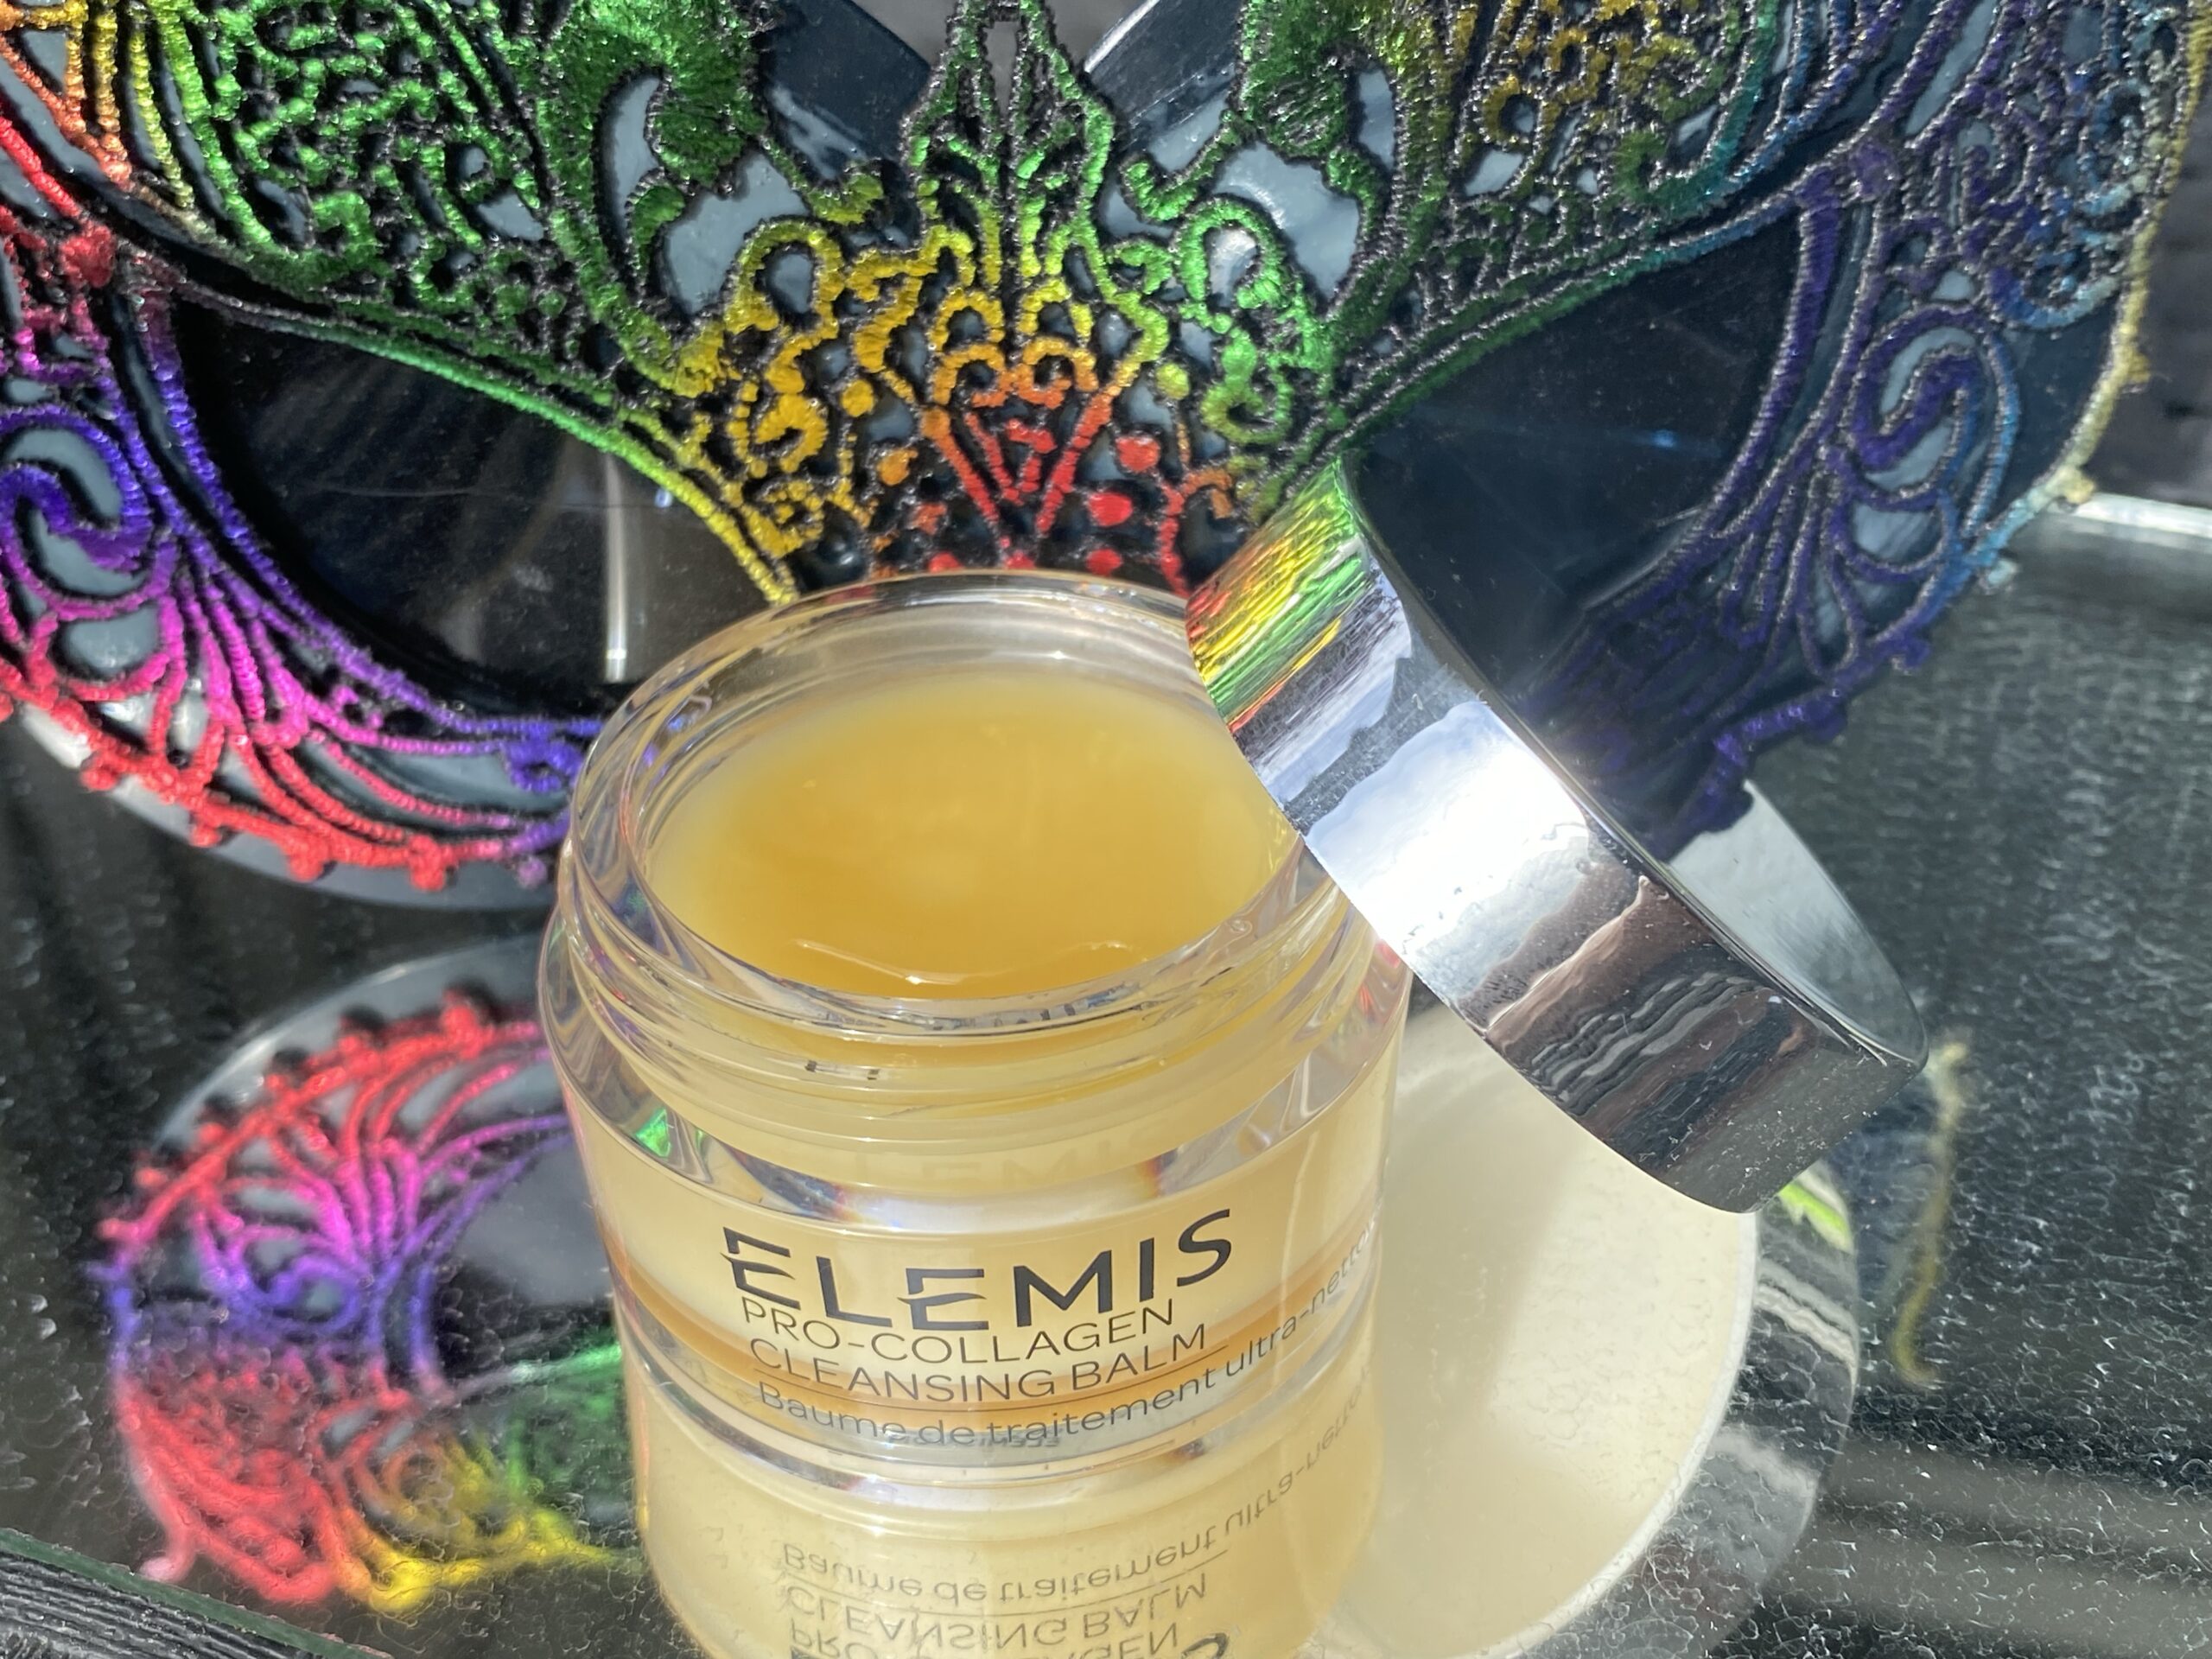 Elemis pro-collagen cleansing balm